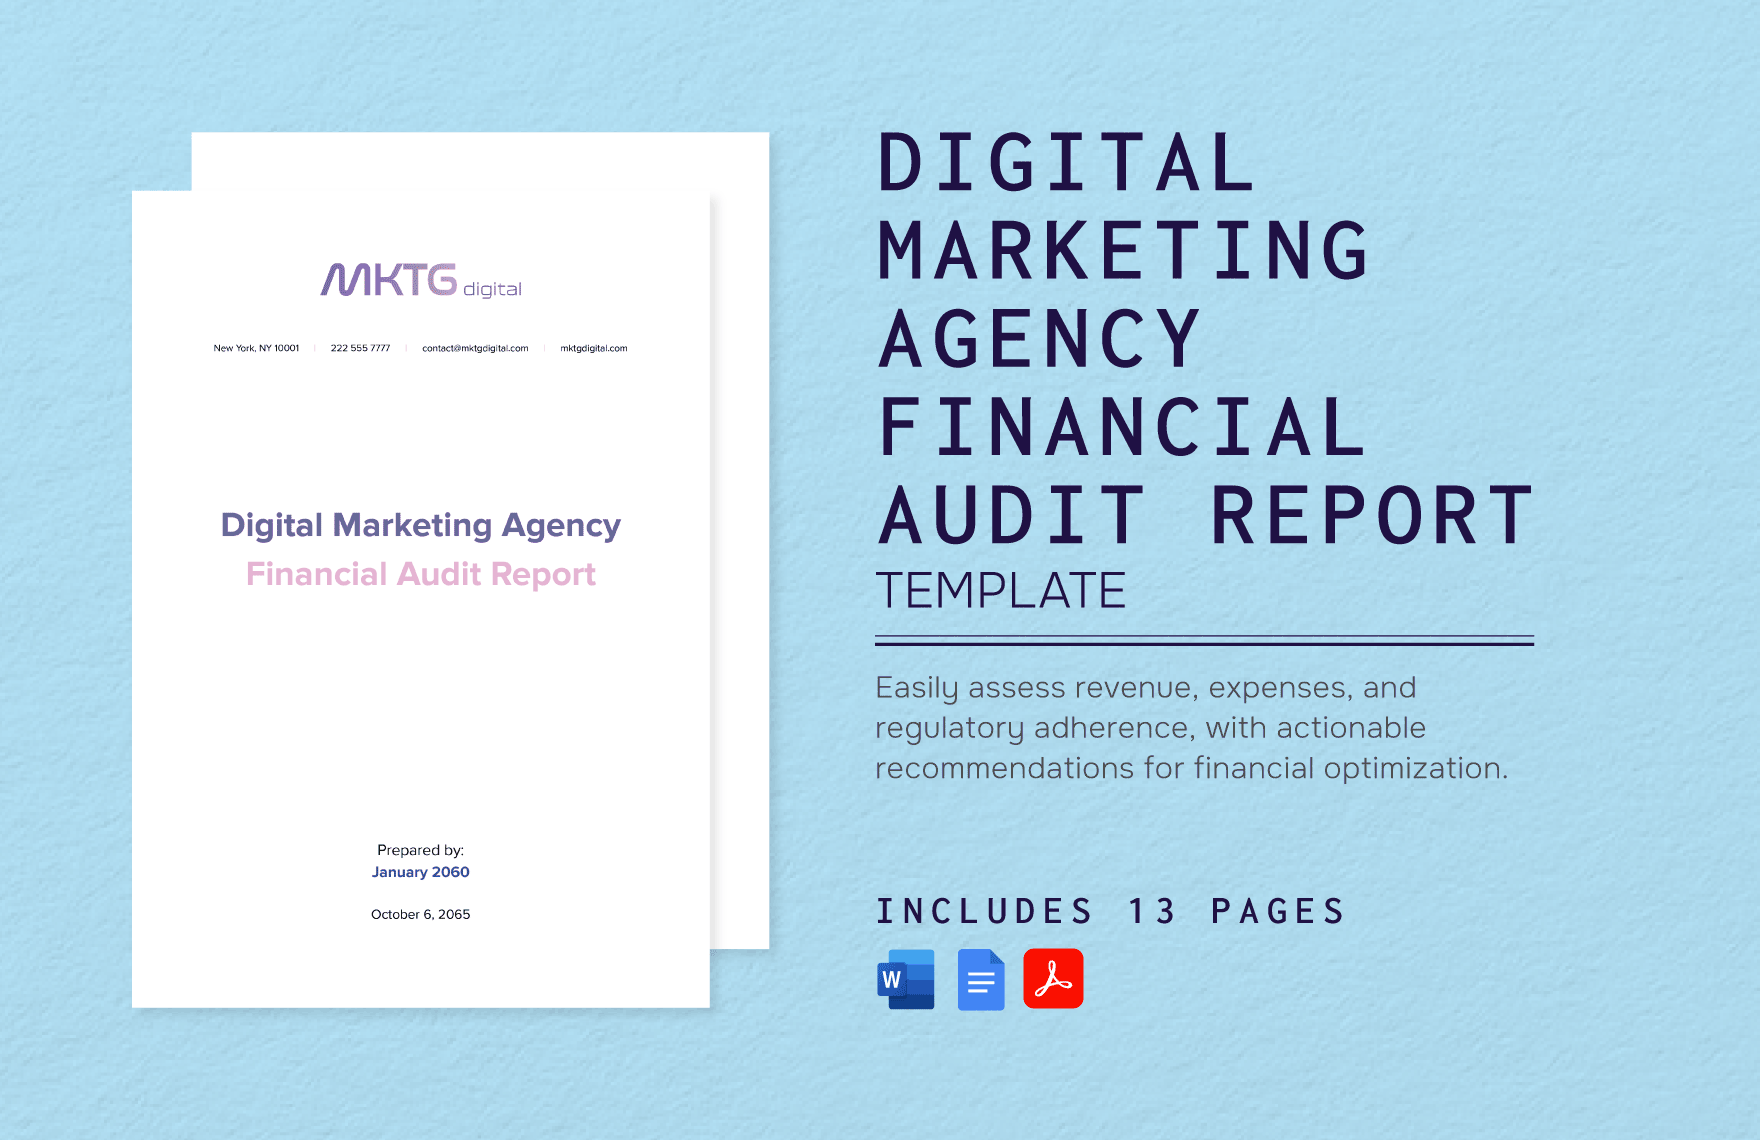 Digital Marketing Agency Financial Audit Report Template